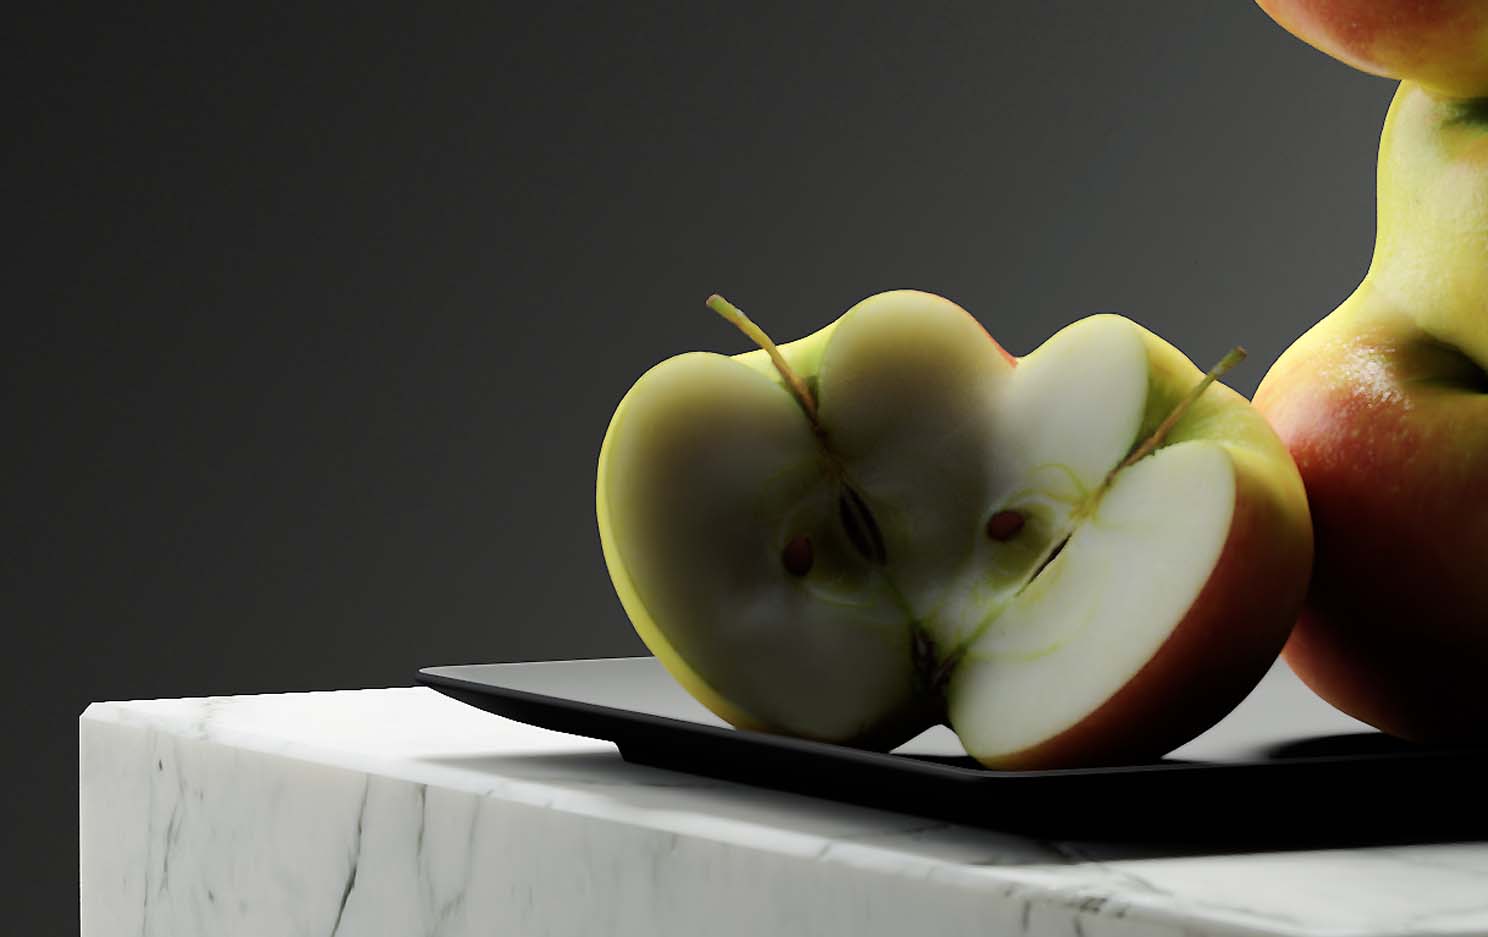 design-motion-3d-photography-octane-redshift-art-visual-animation-render-style-graphic-3ddigital-federicopicci-sculpture-fruit-gmos-omg-genetic-digitalart-lighting-dark-realism-model-fake-marble-setdesign-naturamorta-3dart-apple-detail-macro-slice-juice